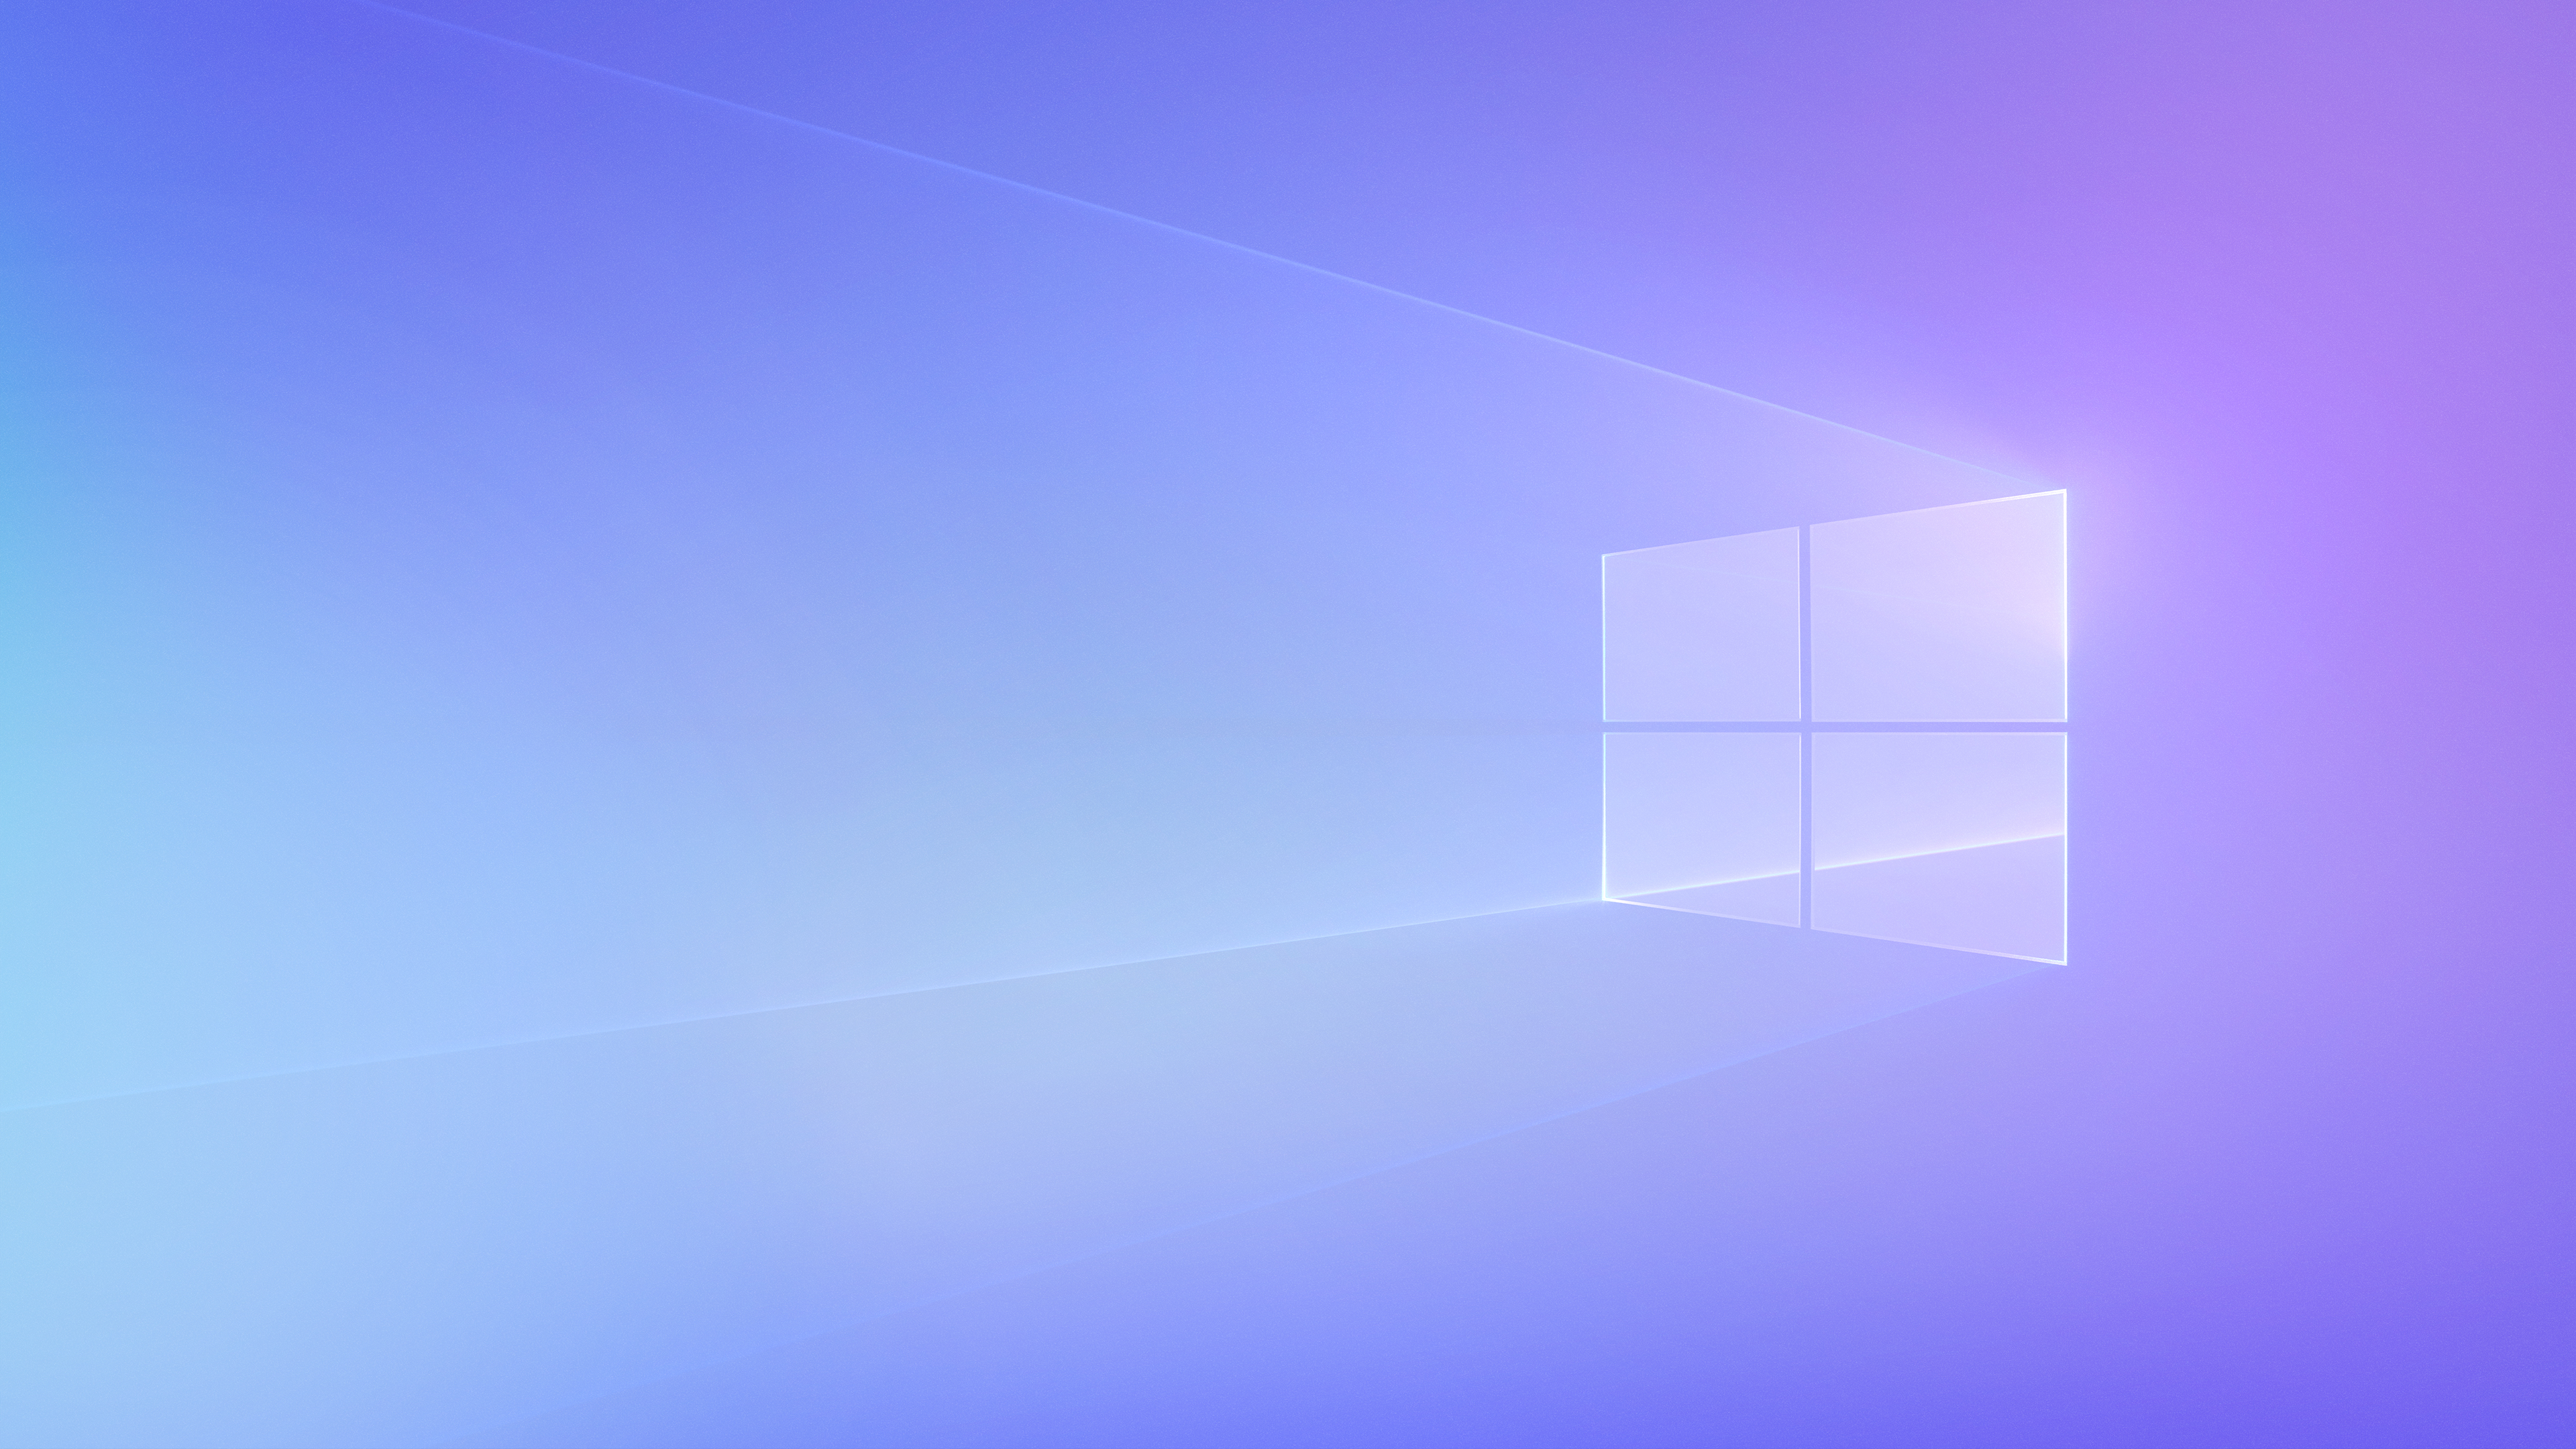 Technology Windows 10 HD Wallpaper | Background Image